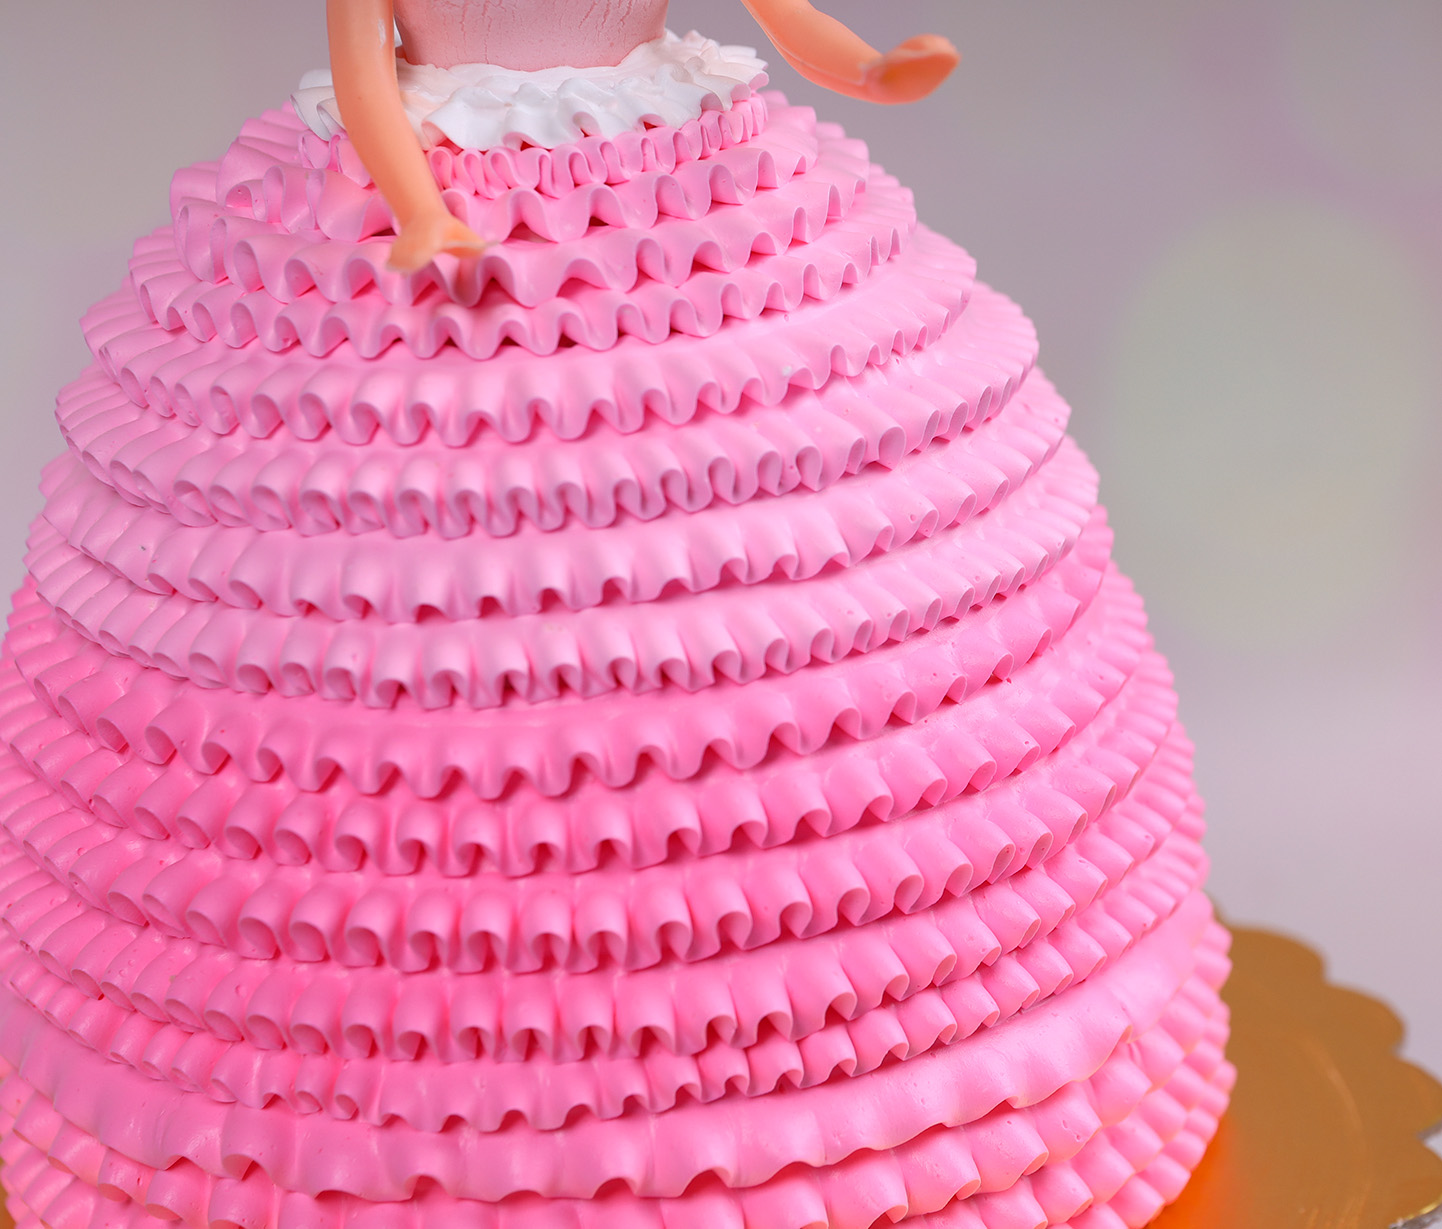 How to Make a Barbie Cake